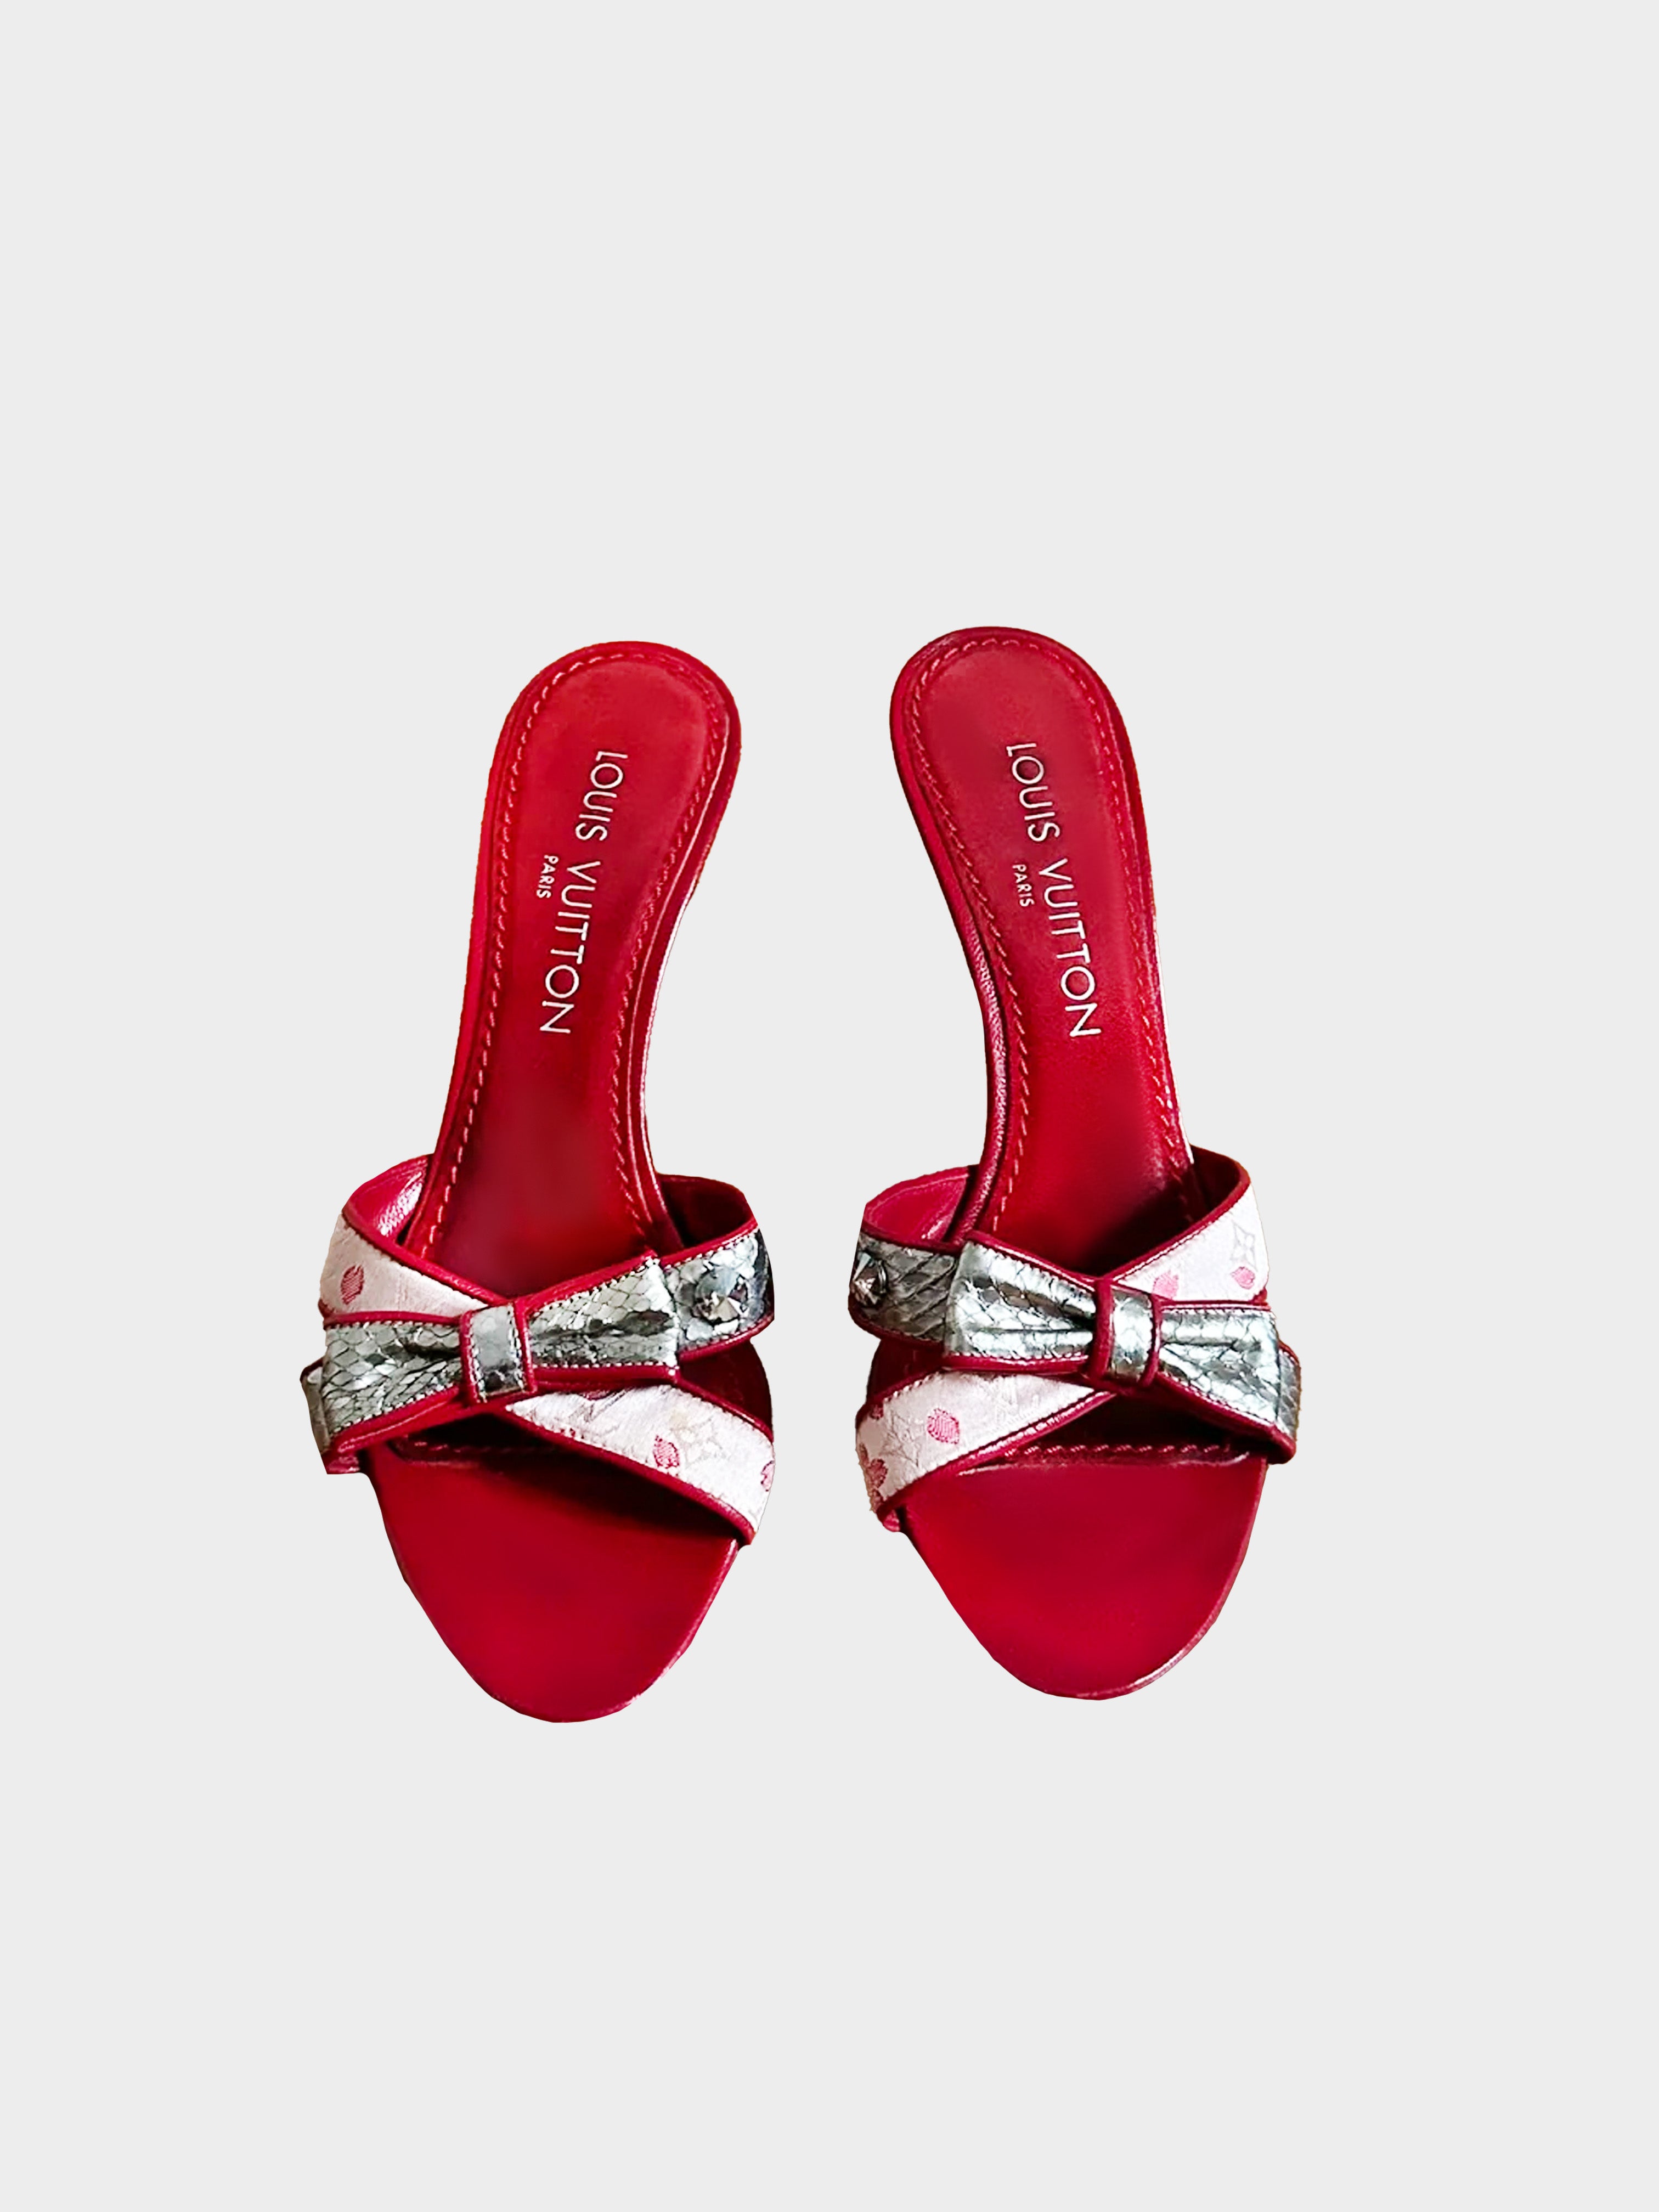 Louis Vuitton 2003 Red Cherry Heels